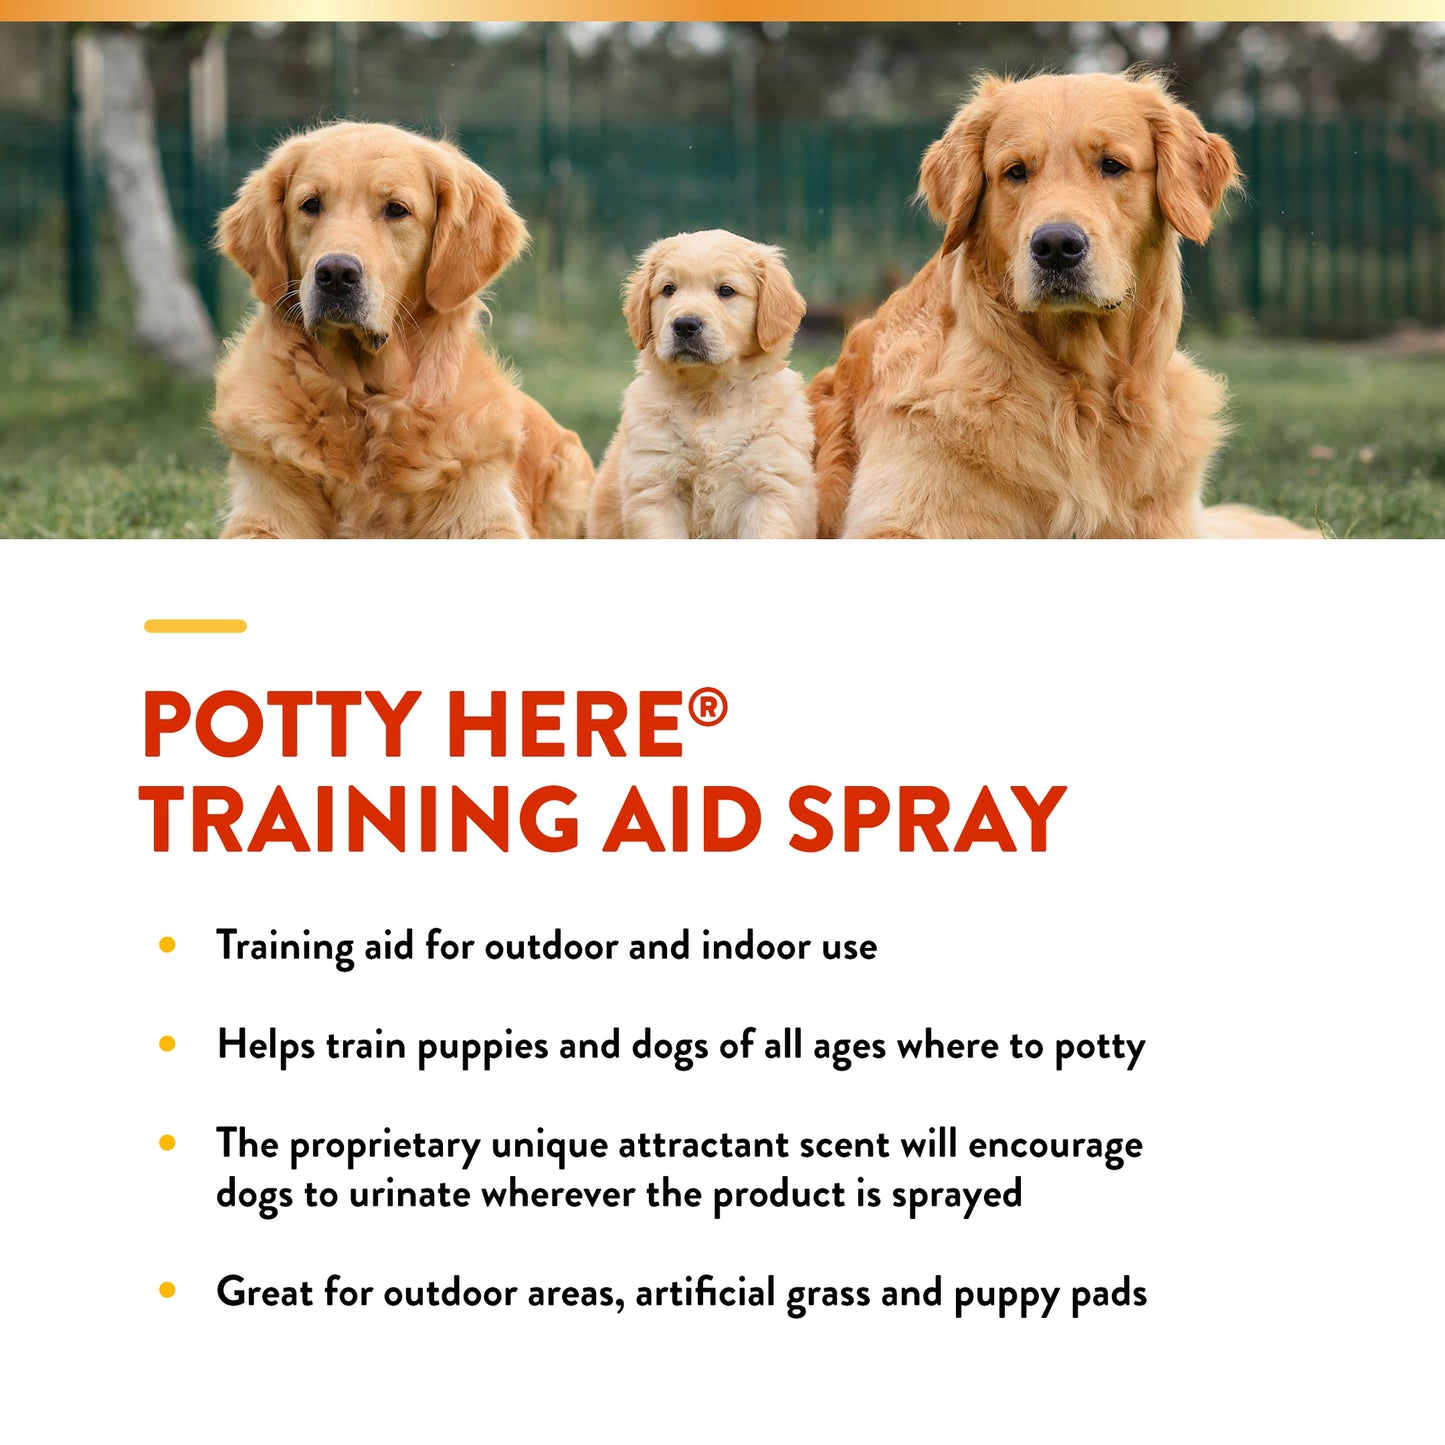 Potty Here® Training Aid Spray